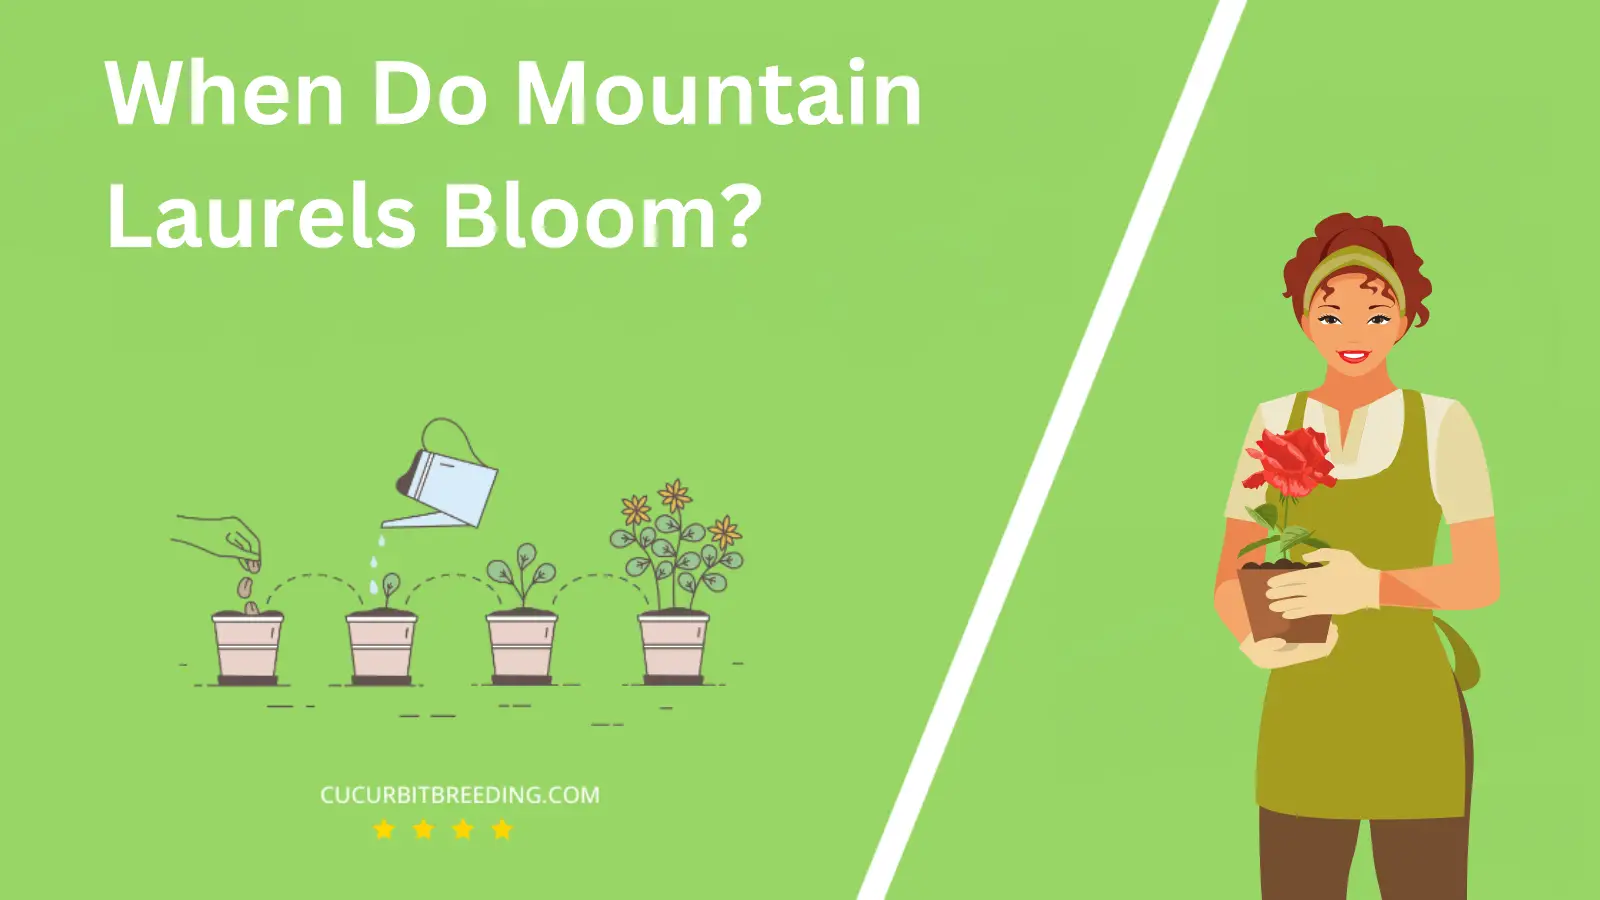 When Do Mountain Laurels Bloom?